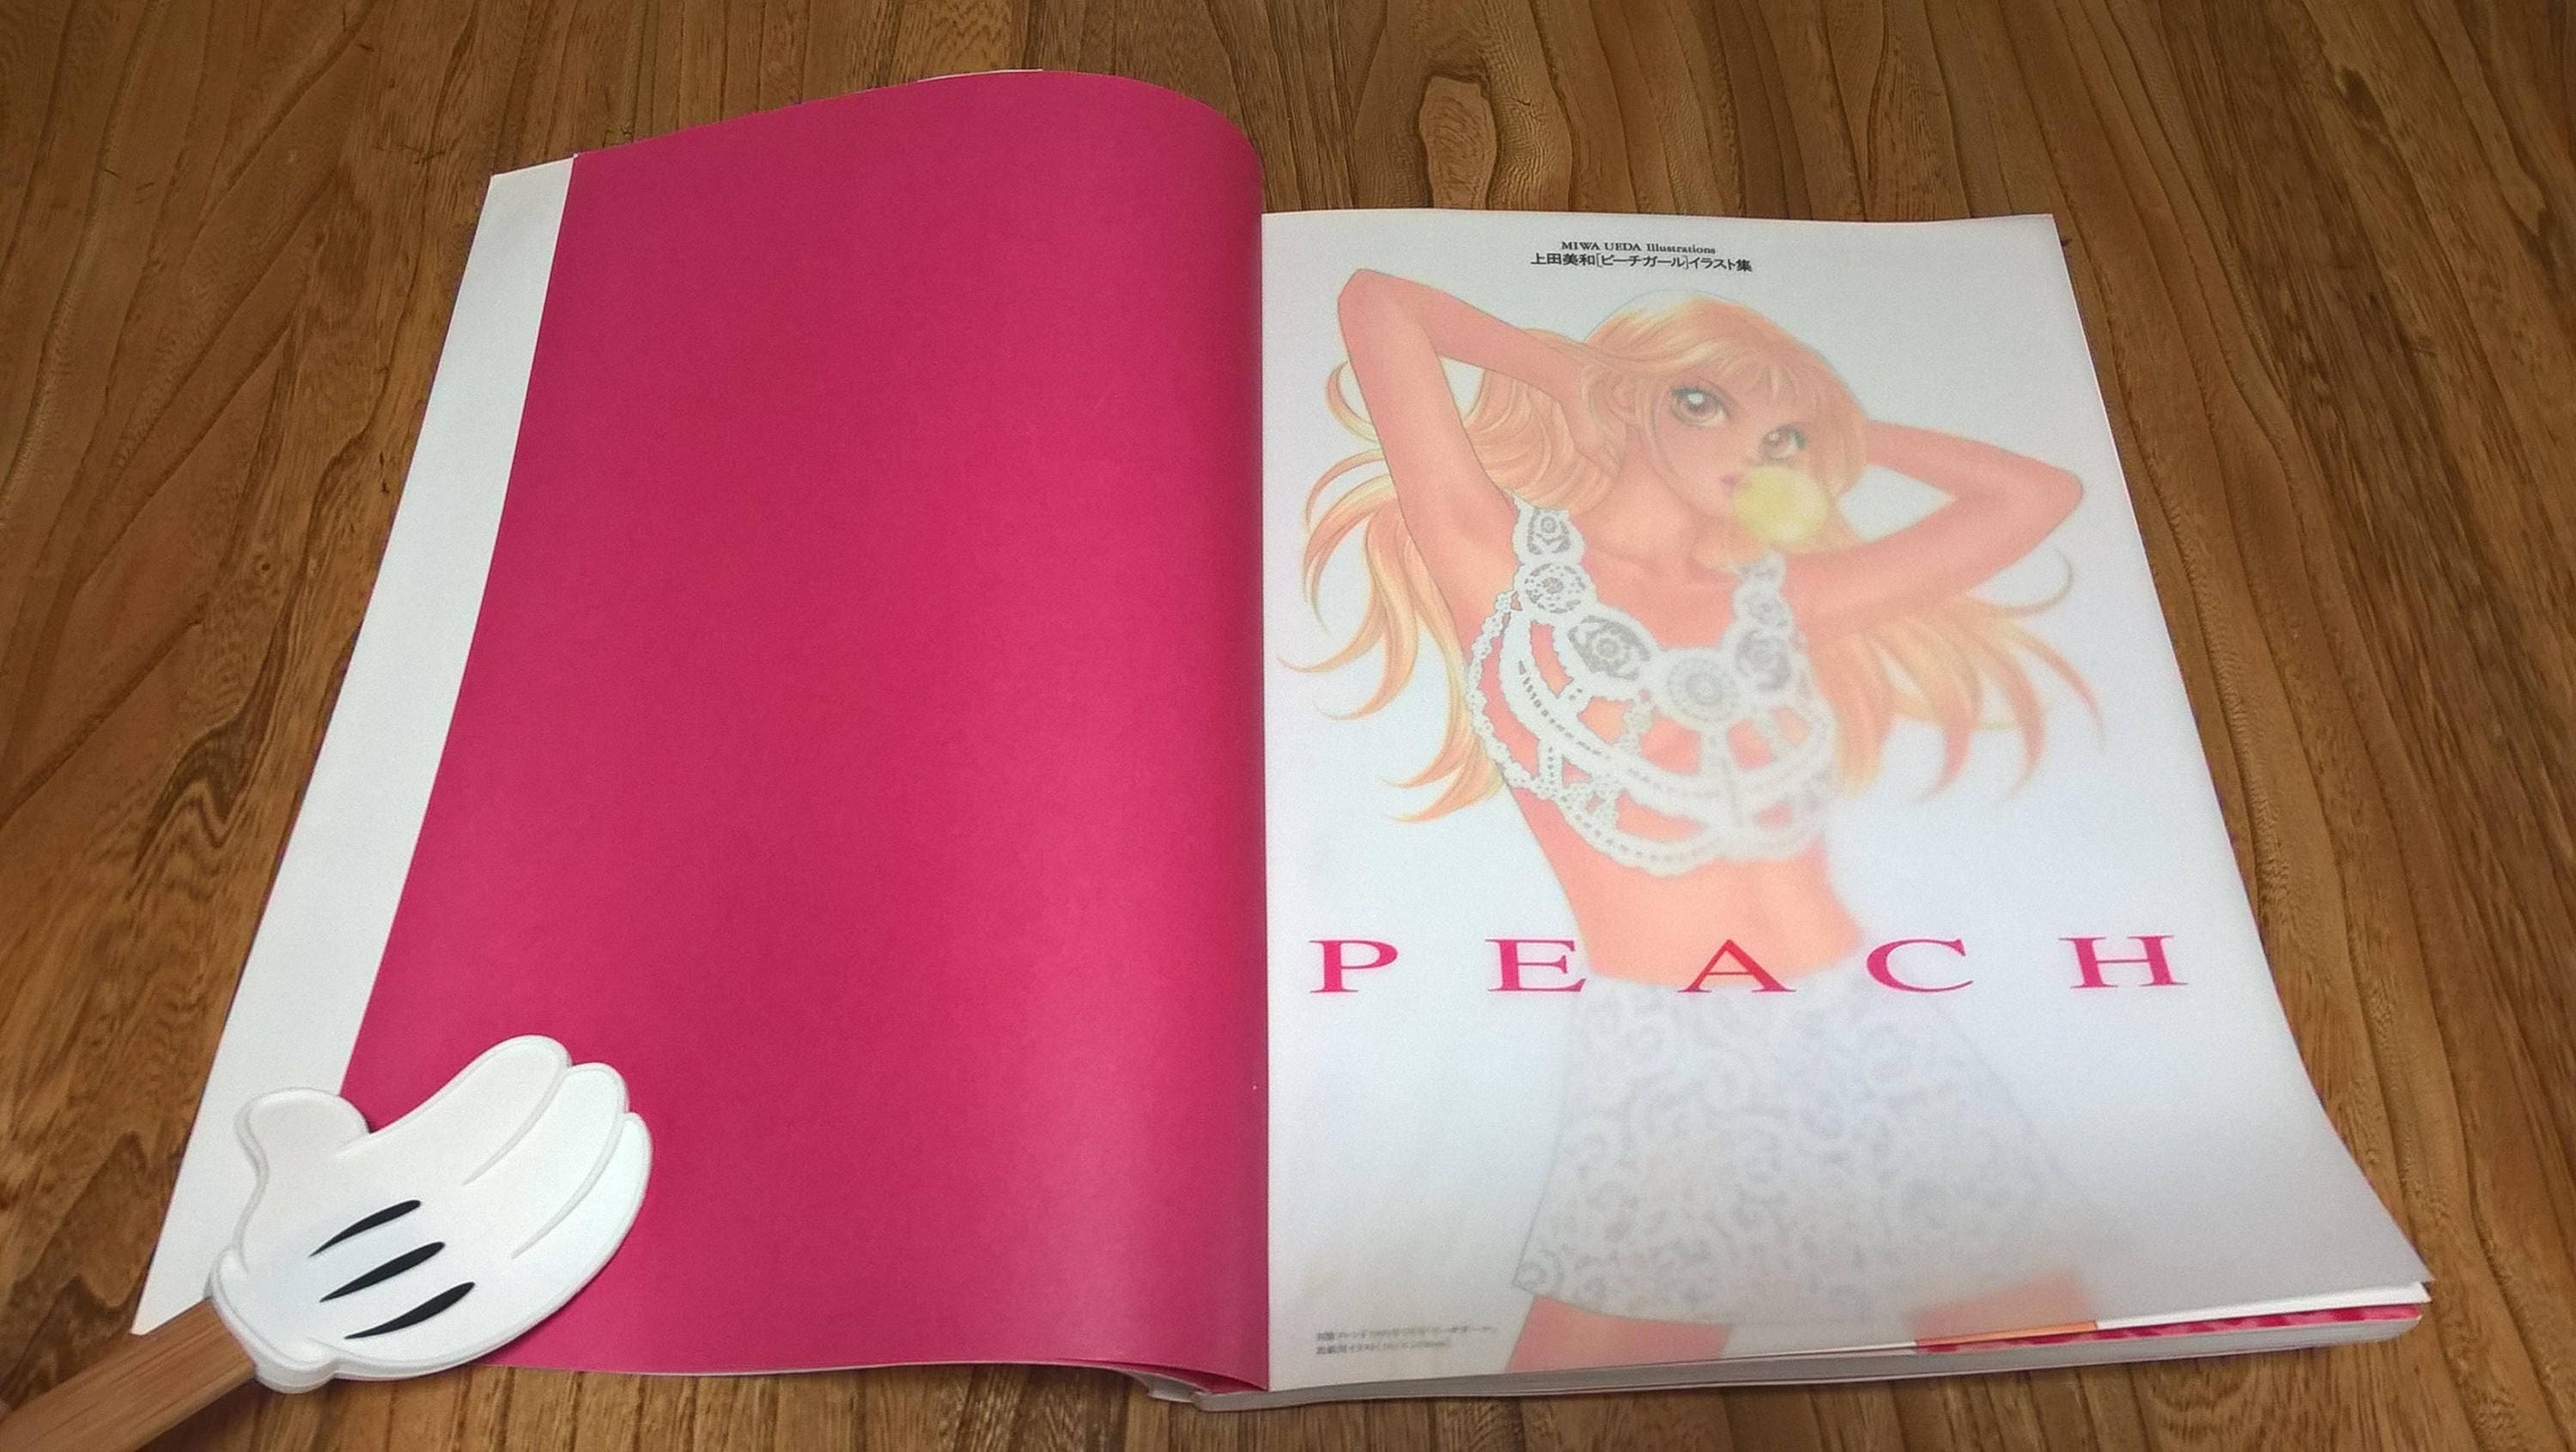 Peach Miwa Ueda Illustrations First Edition Manga Japanese Comics Shojo Manga Tokyopop Peach Girl Glass Hearts Angel Wars 1990s